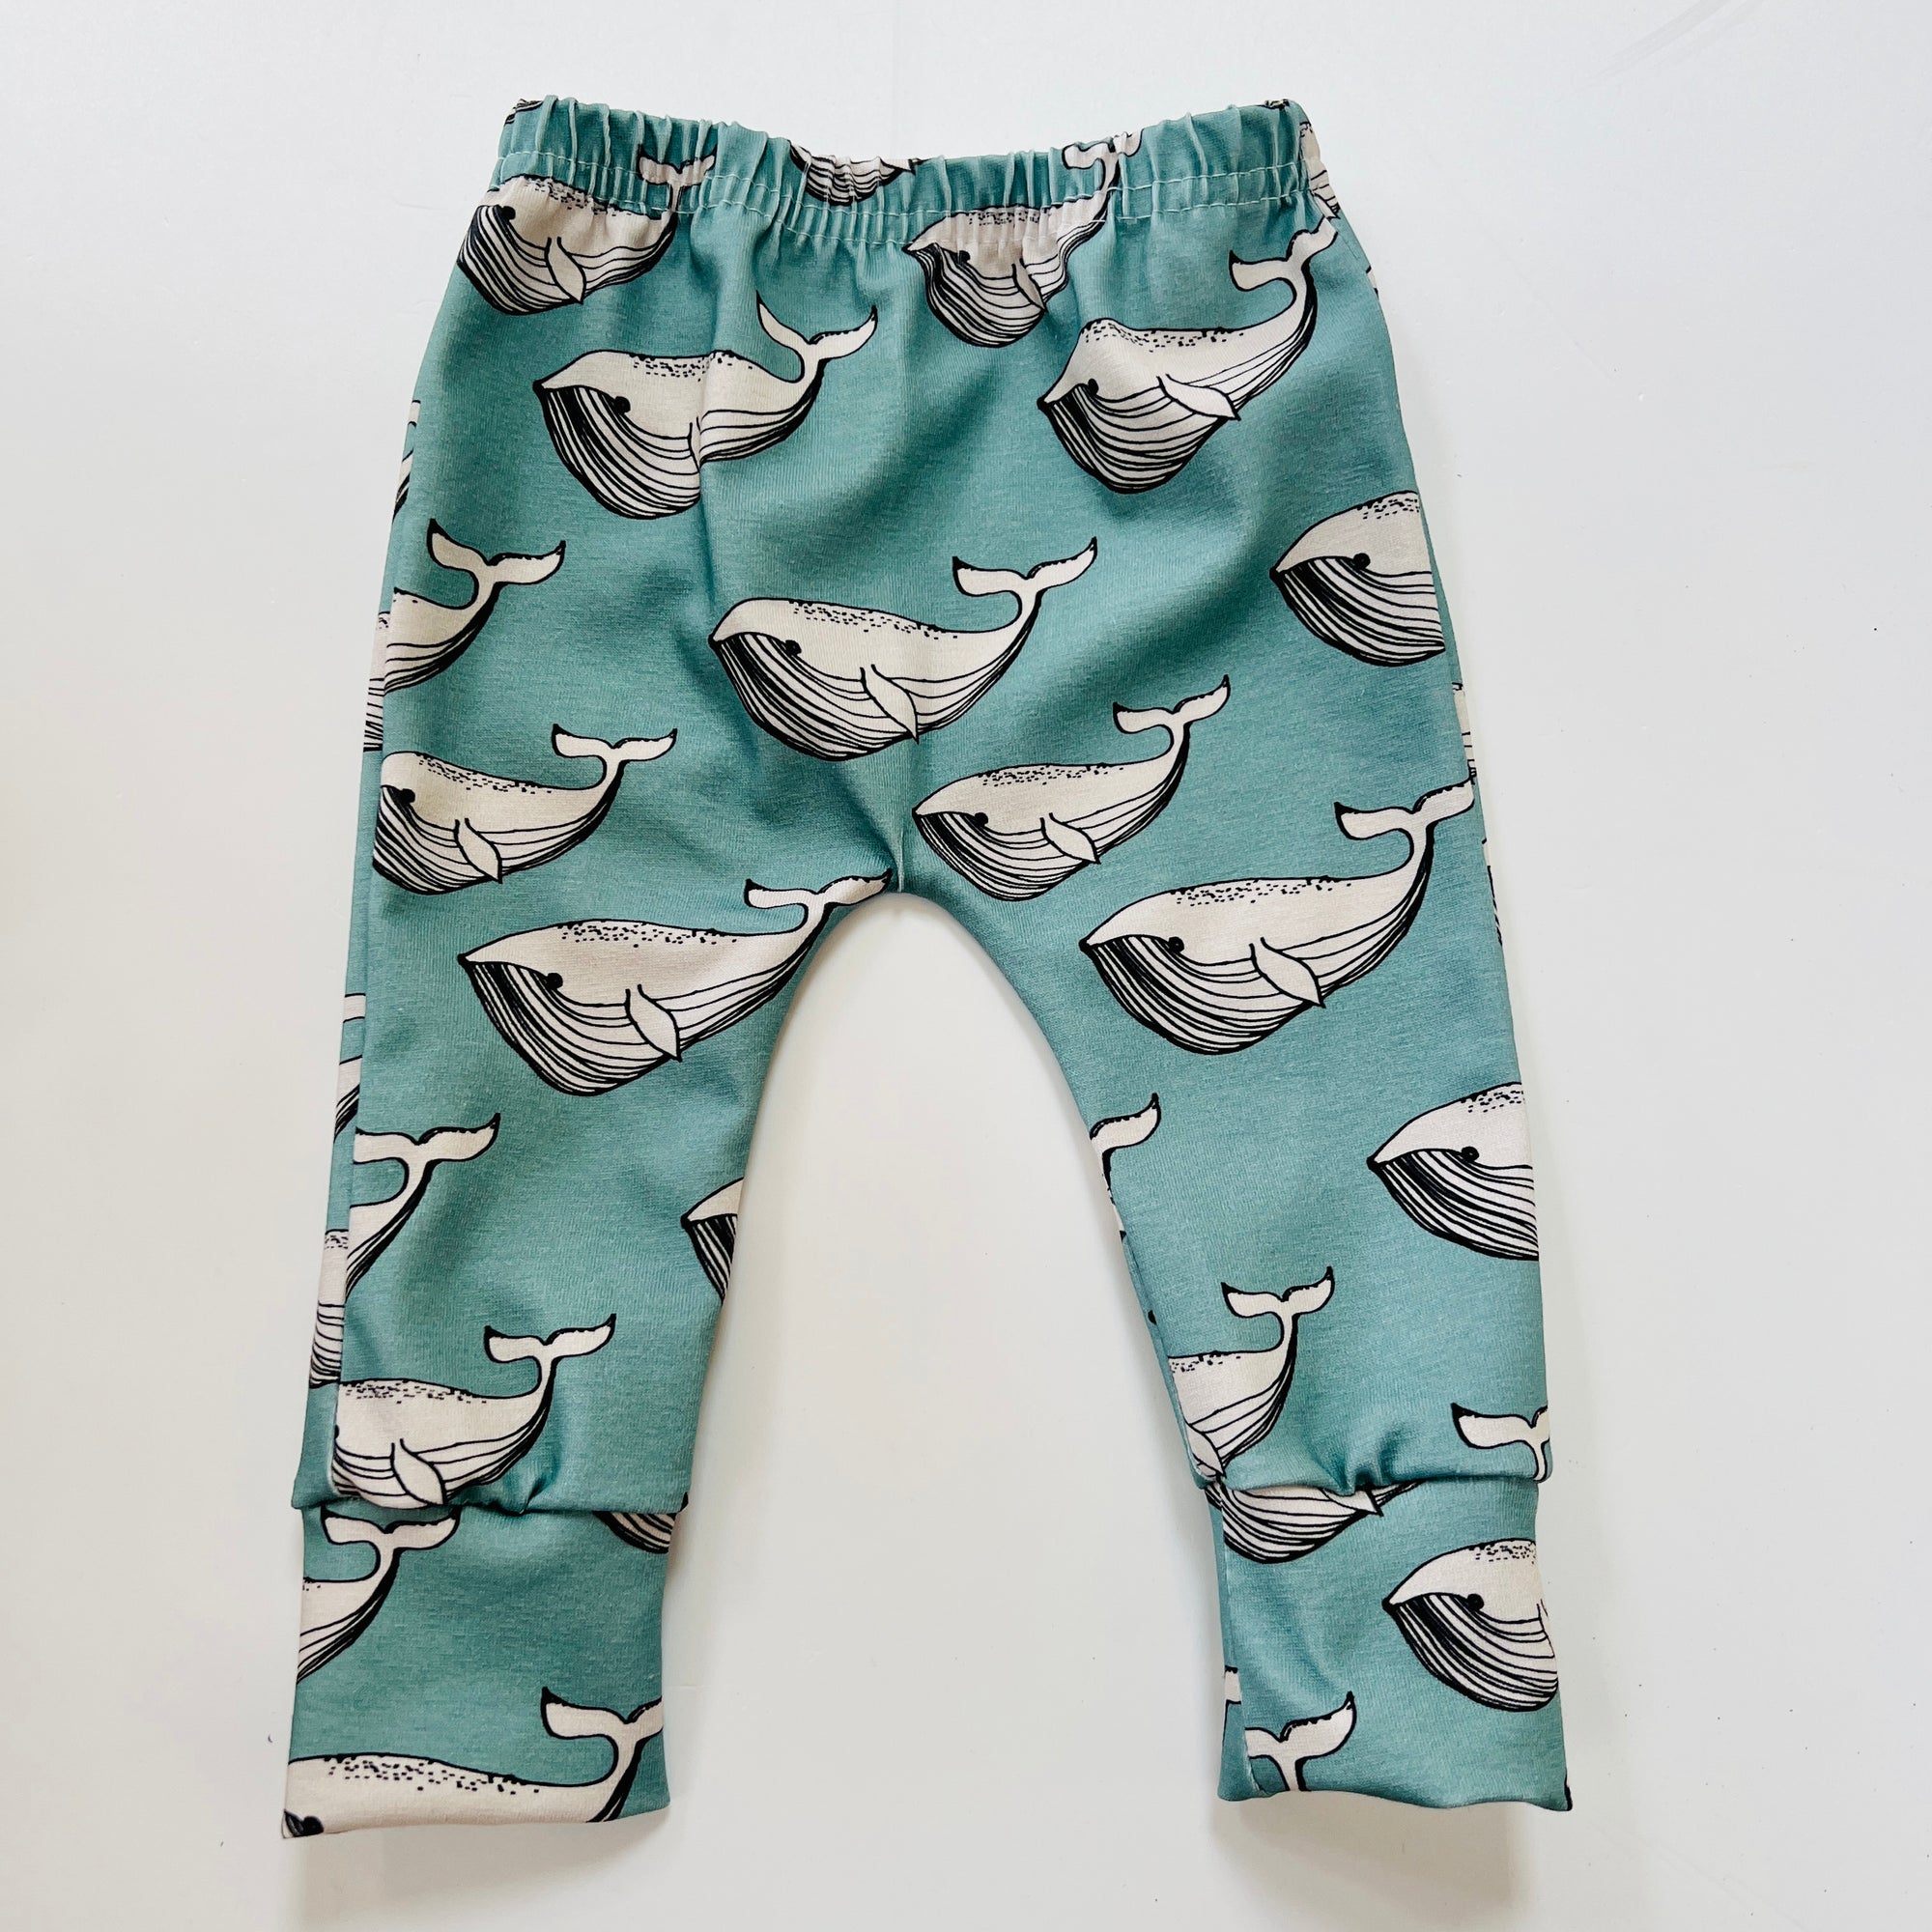 Eddie & Bee organic cotton leggings in Aqua “Whales" print.